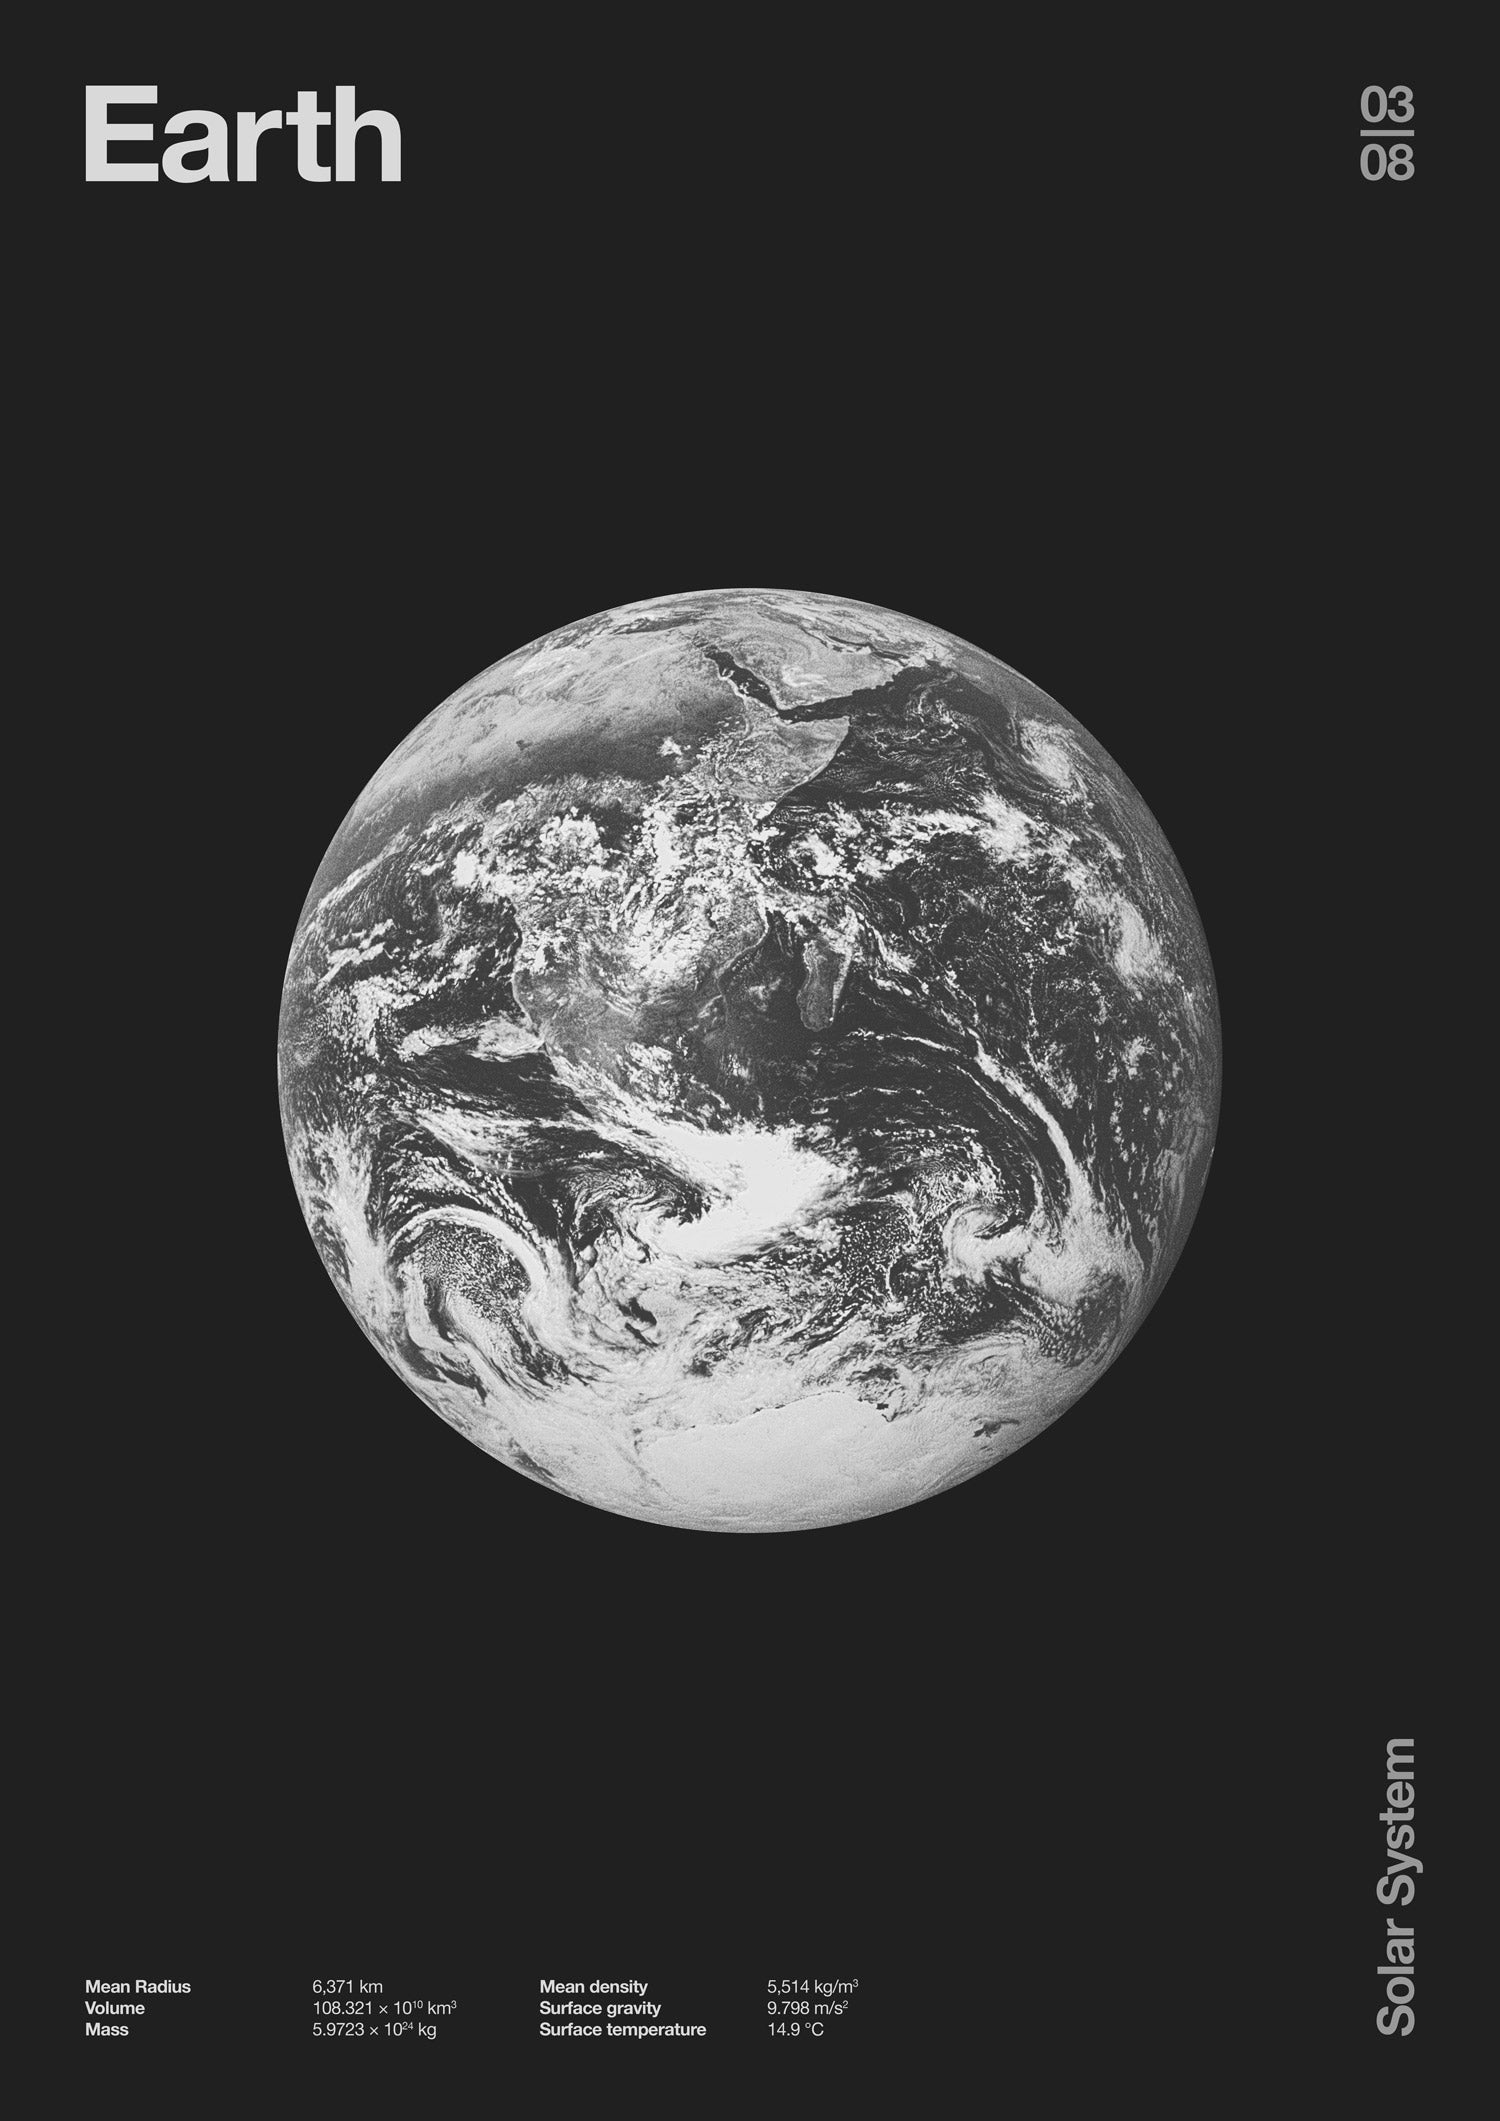 Earth Art Print by Florent Bodart